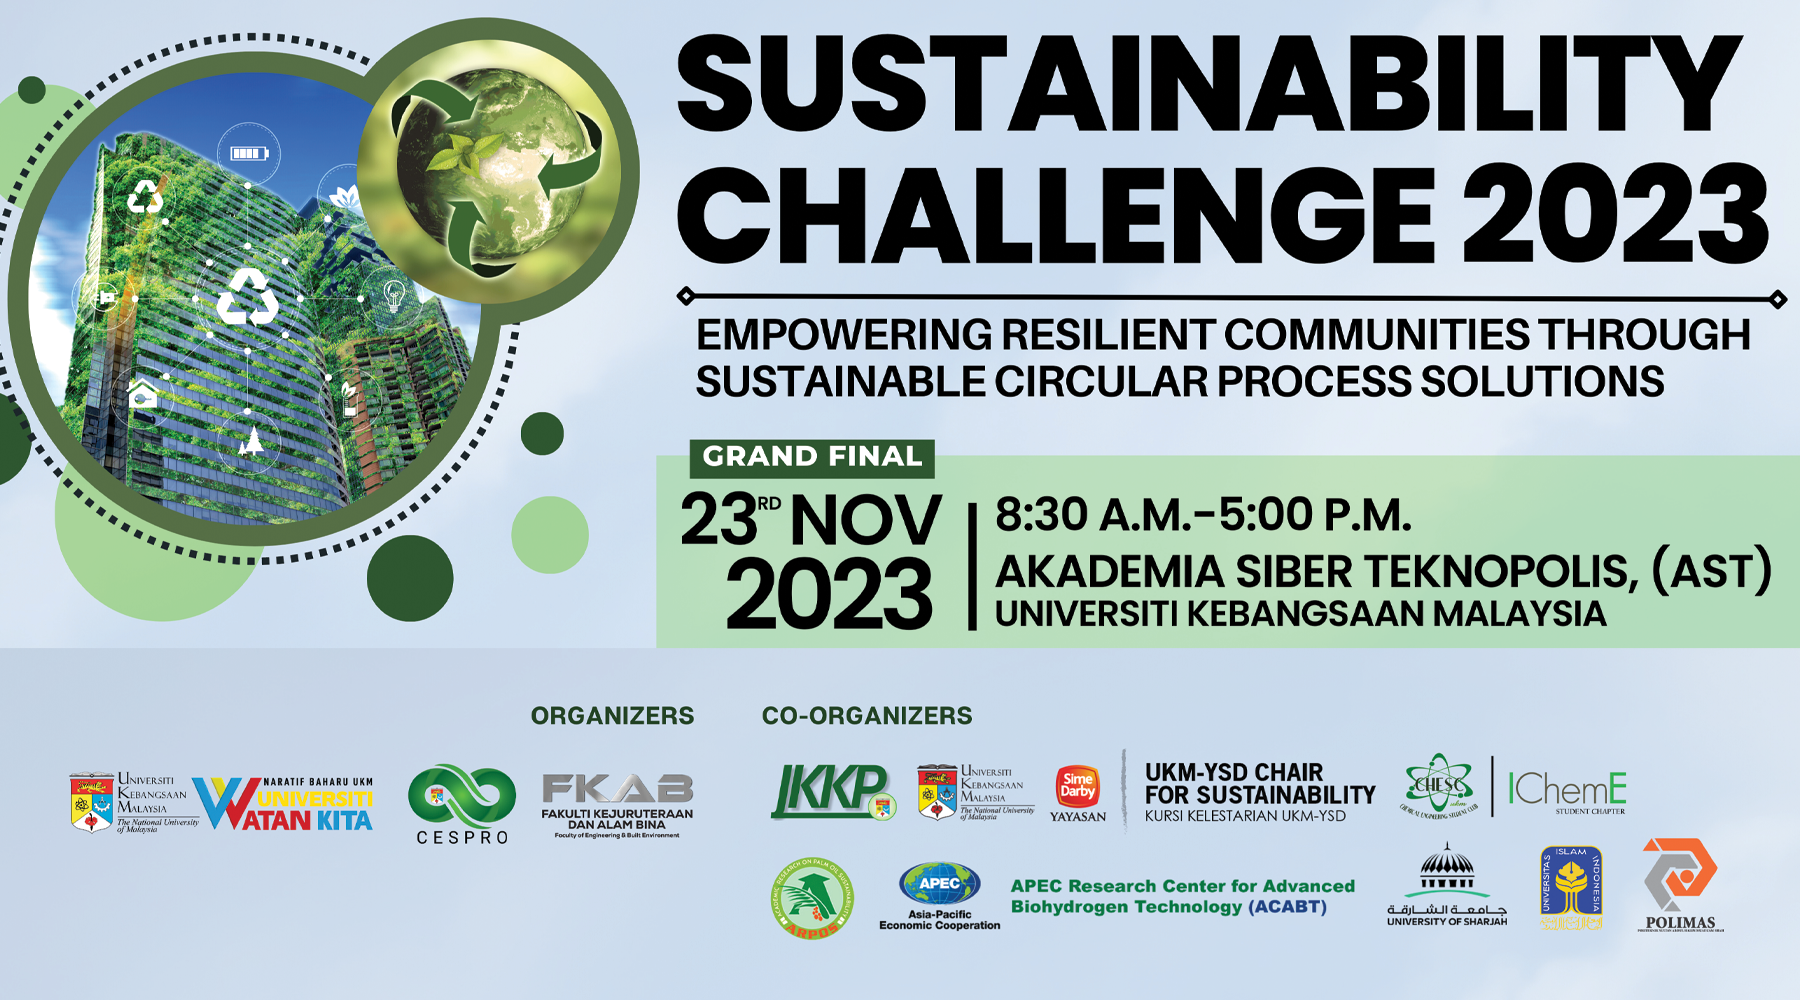 The Sustainability Challenge 2023